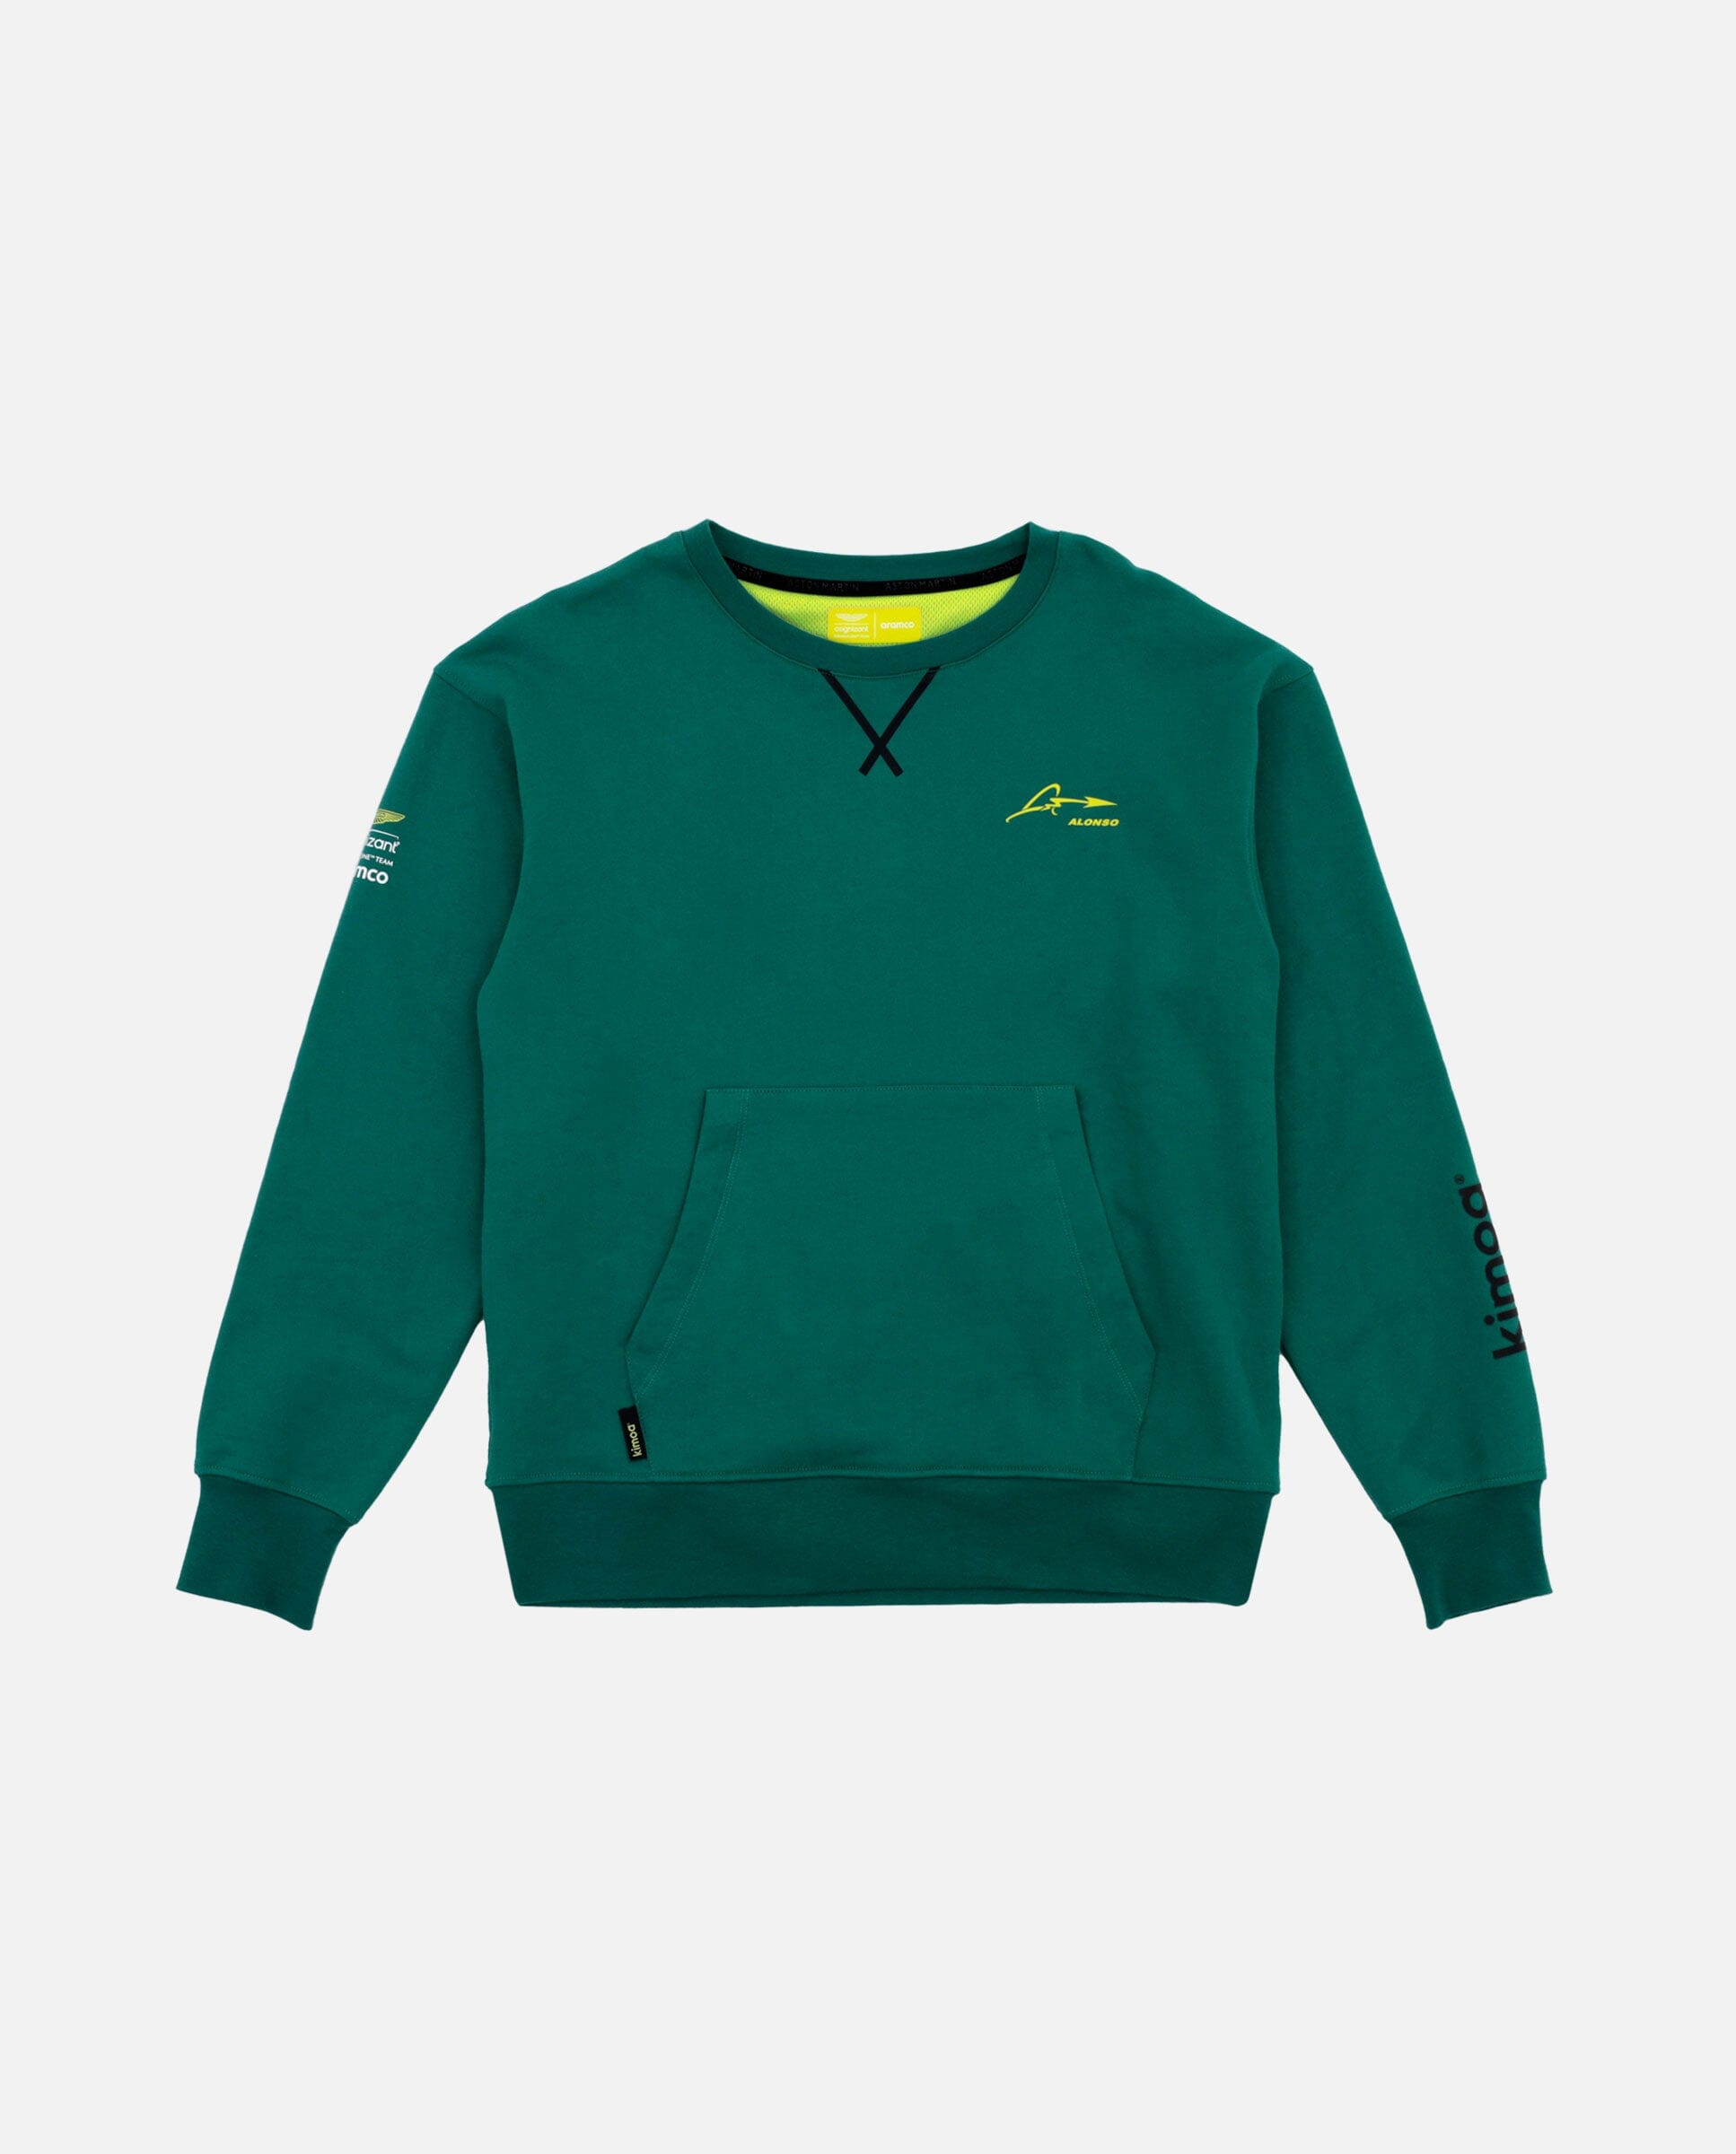 Aston Martin F1 Kimoa Fernando Alonso Men's Lifestyle Sweater - Green